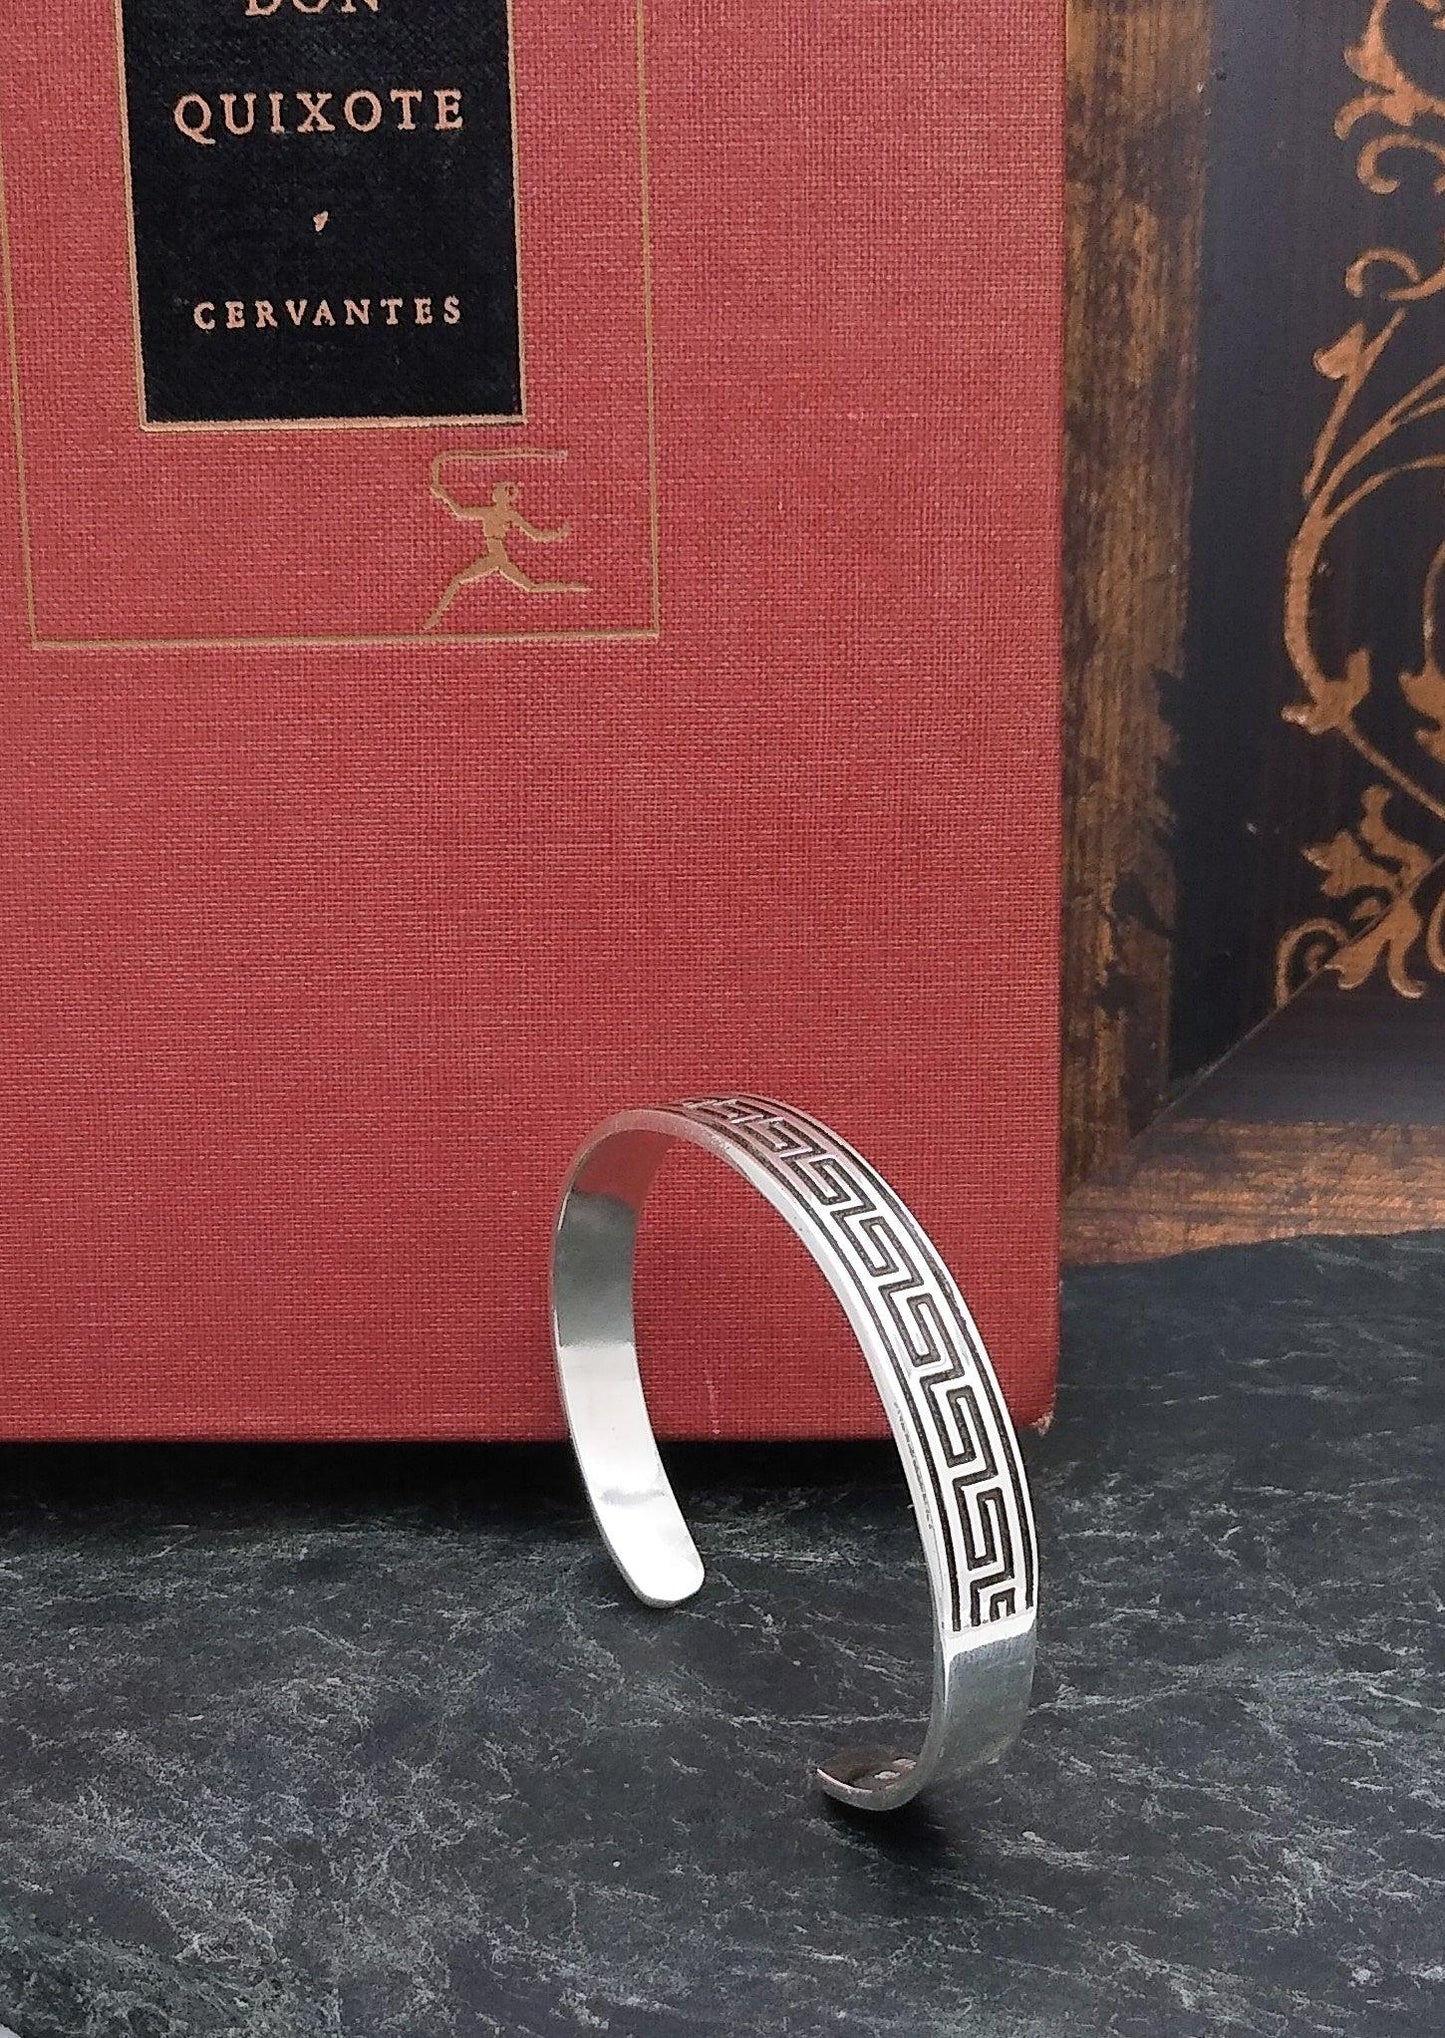 sterling silver greek key sterling silver bracelet.  Medium sized. 3/8 inches wide.